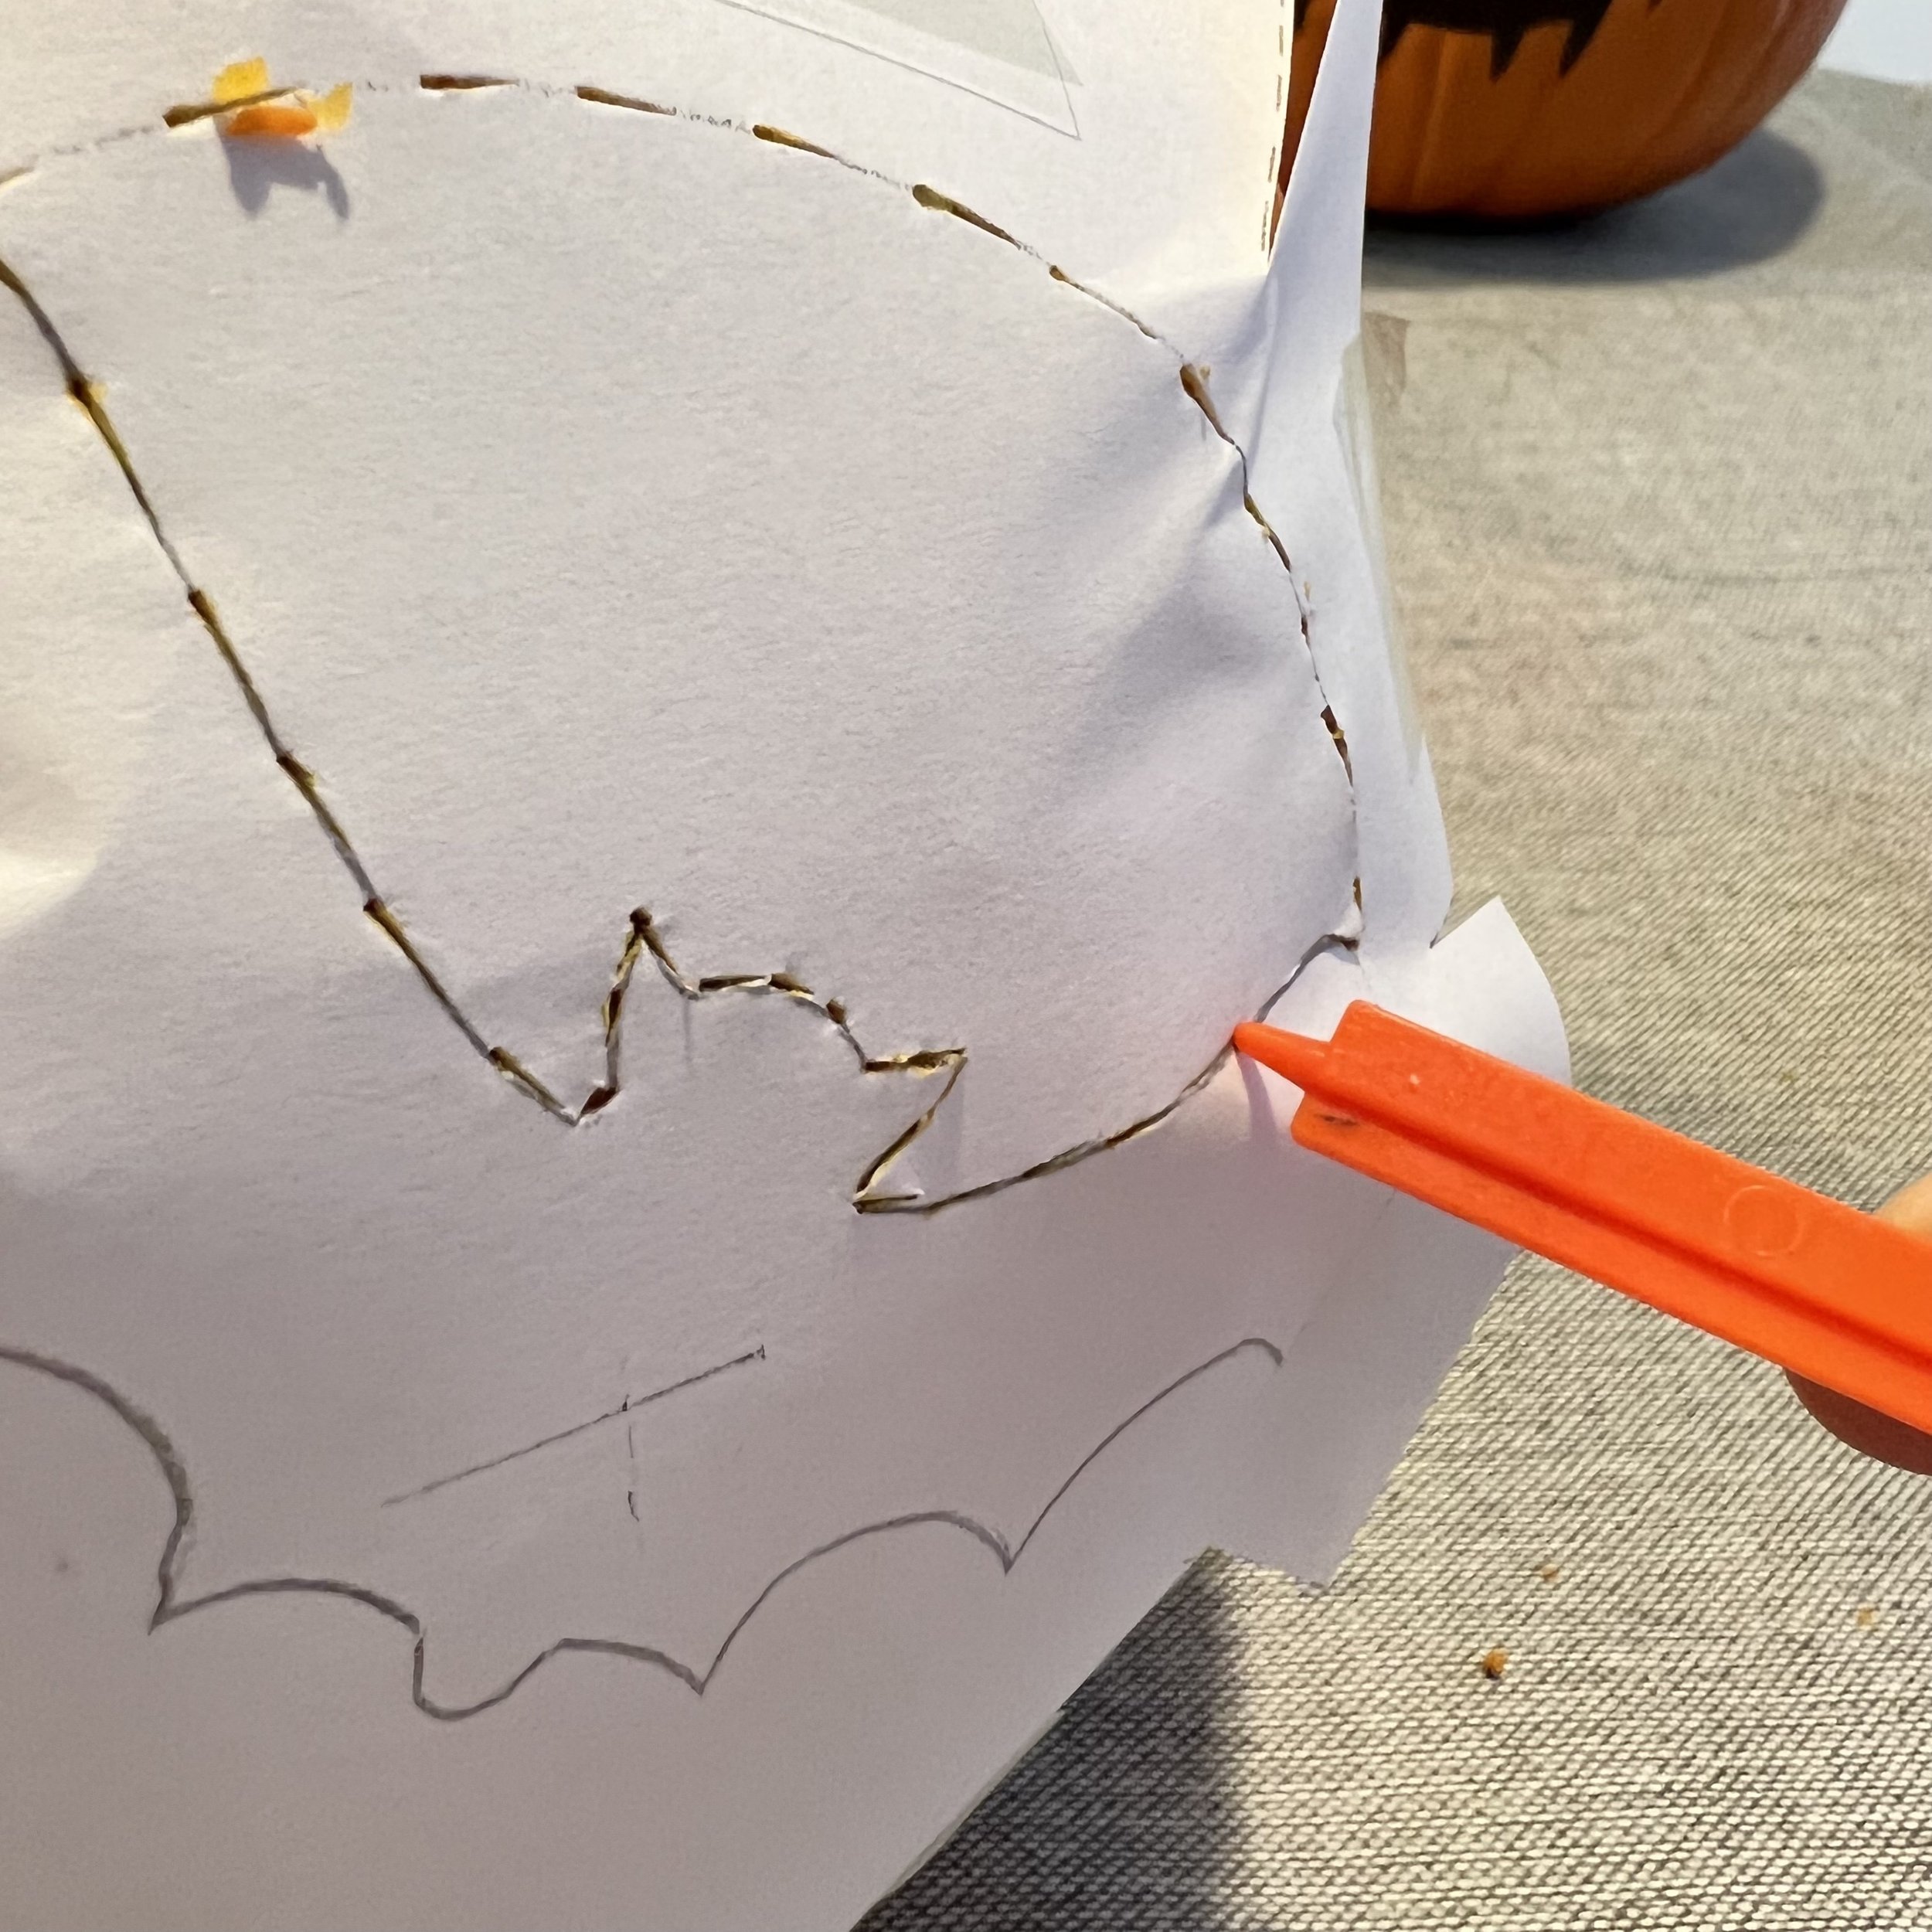 Pumpkin-Carving-Bat-In-Progress-Sarah-Ransome-Art.jpg